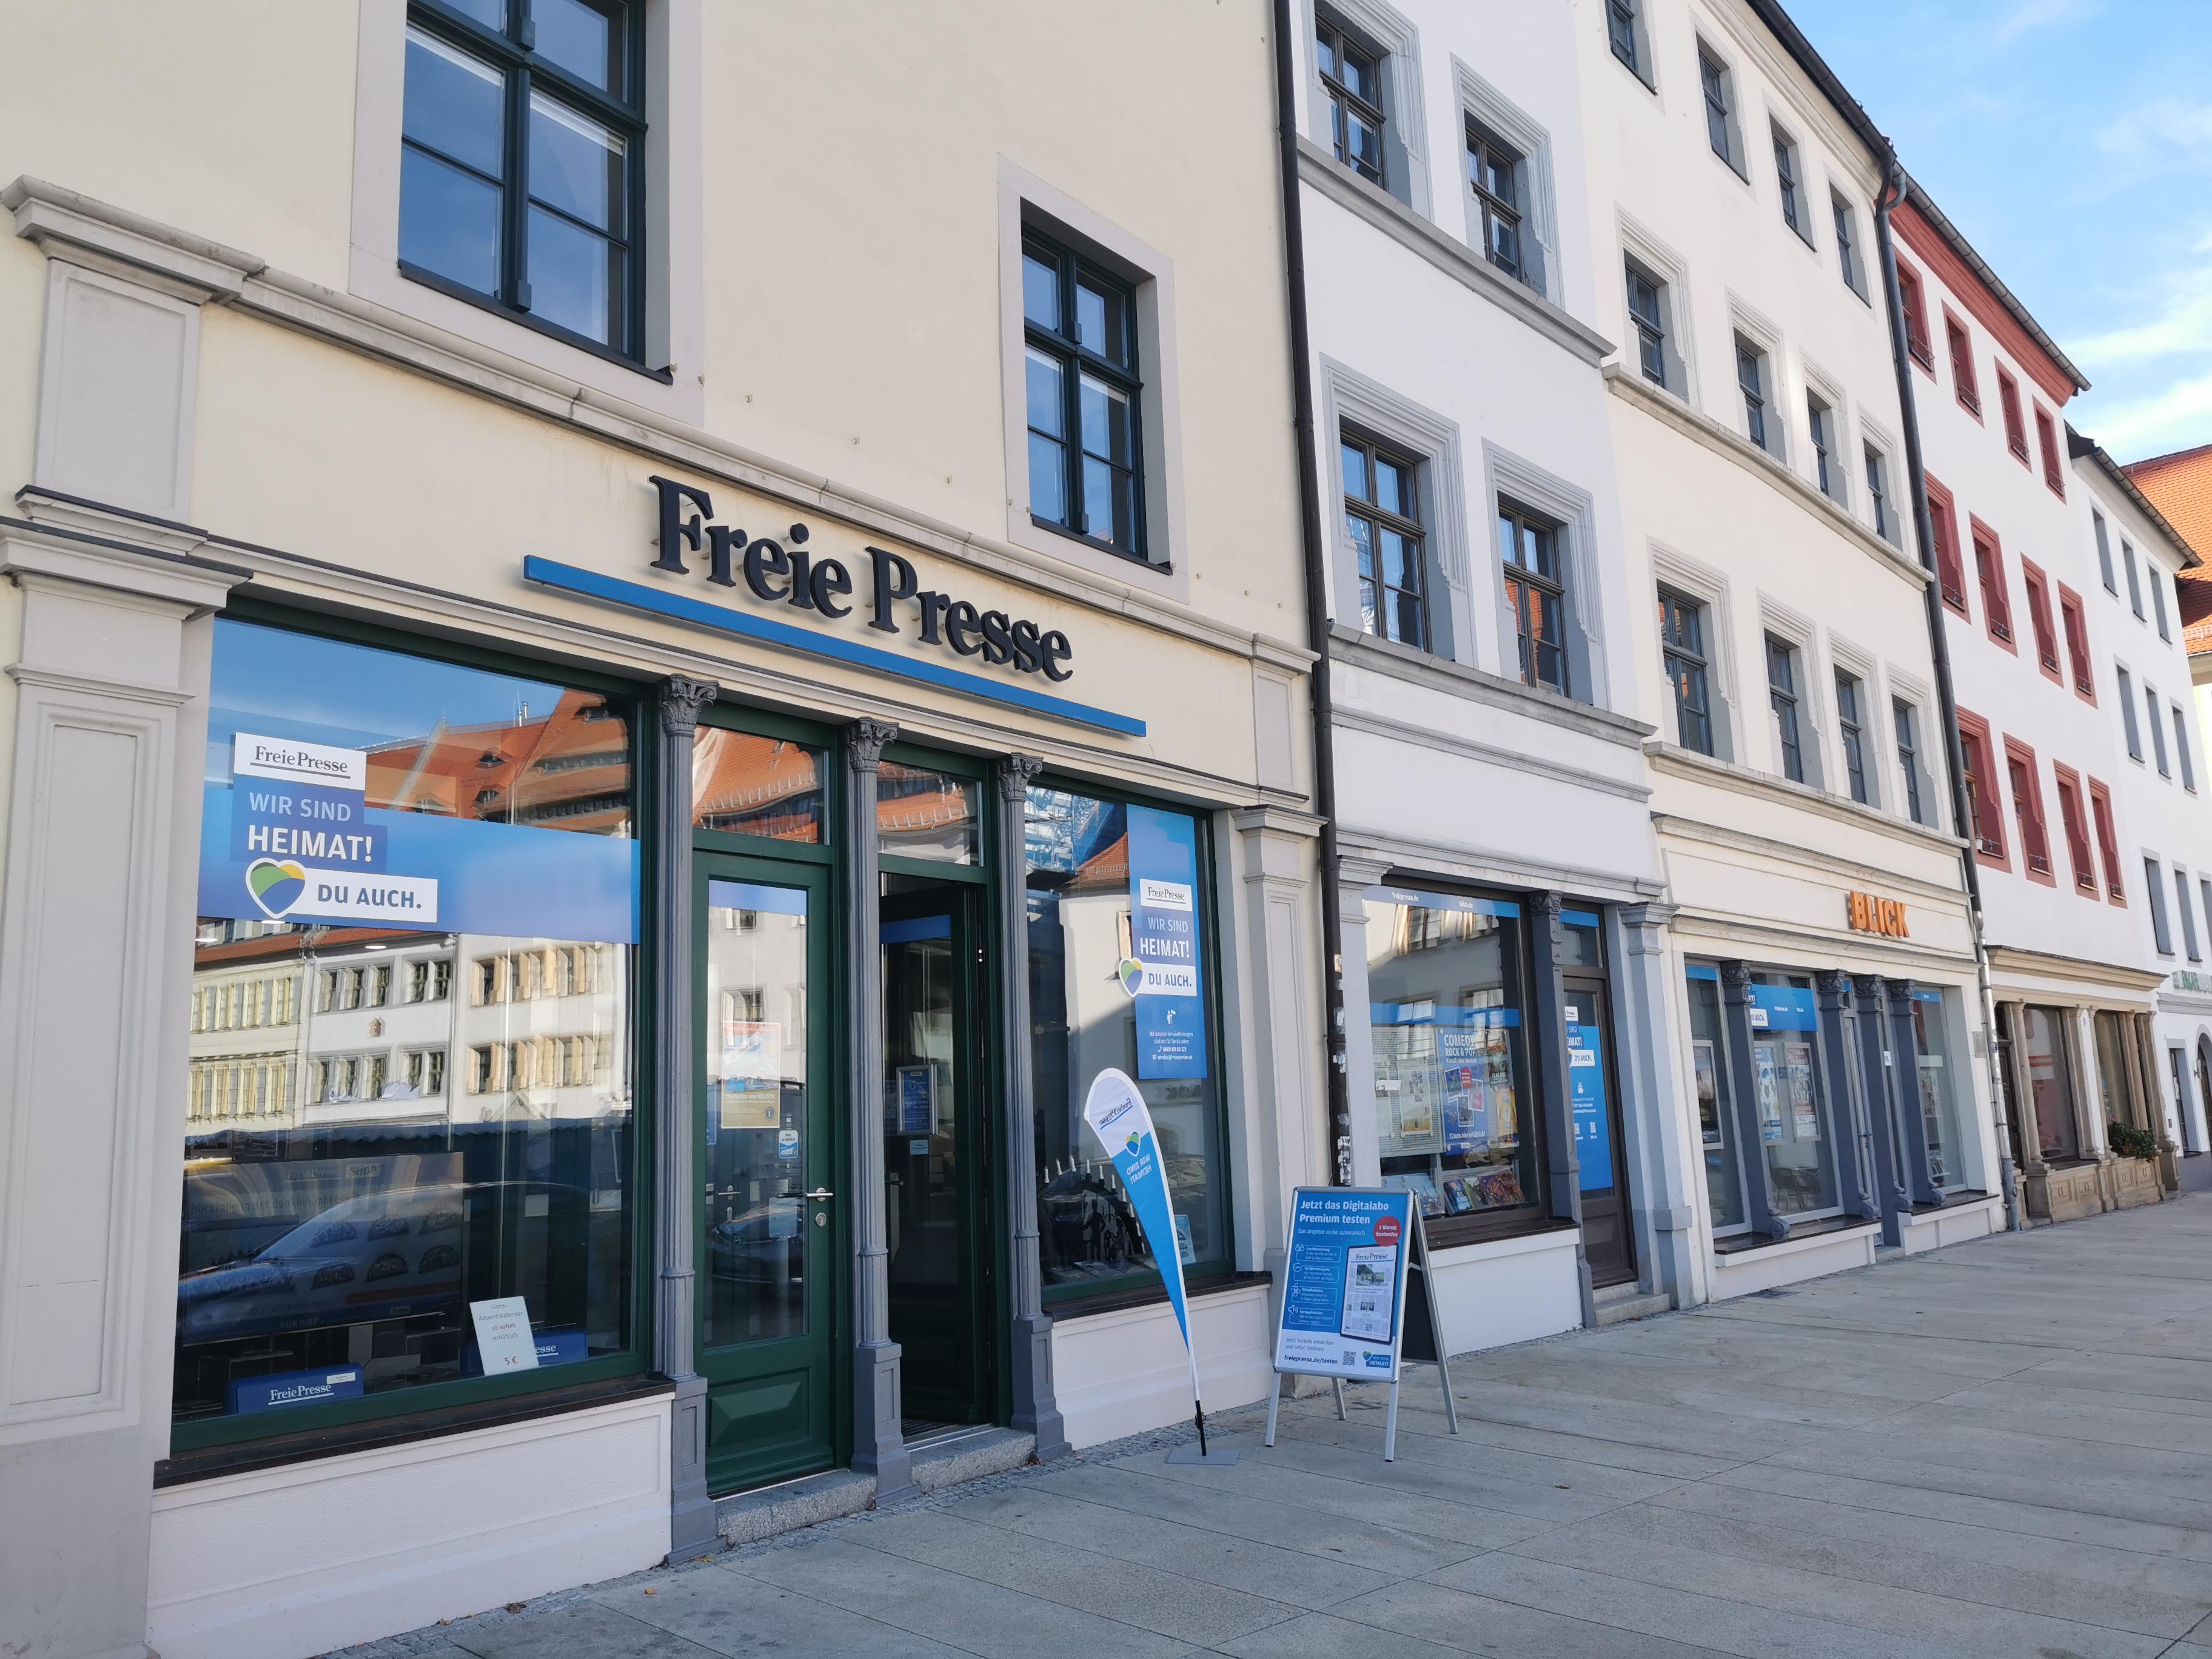 Bild 3 Freie Presse Shop in Freiberg